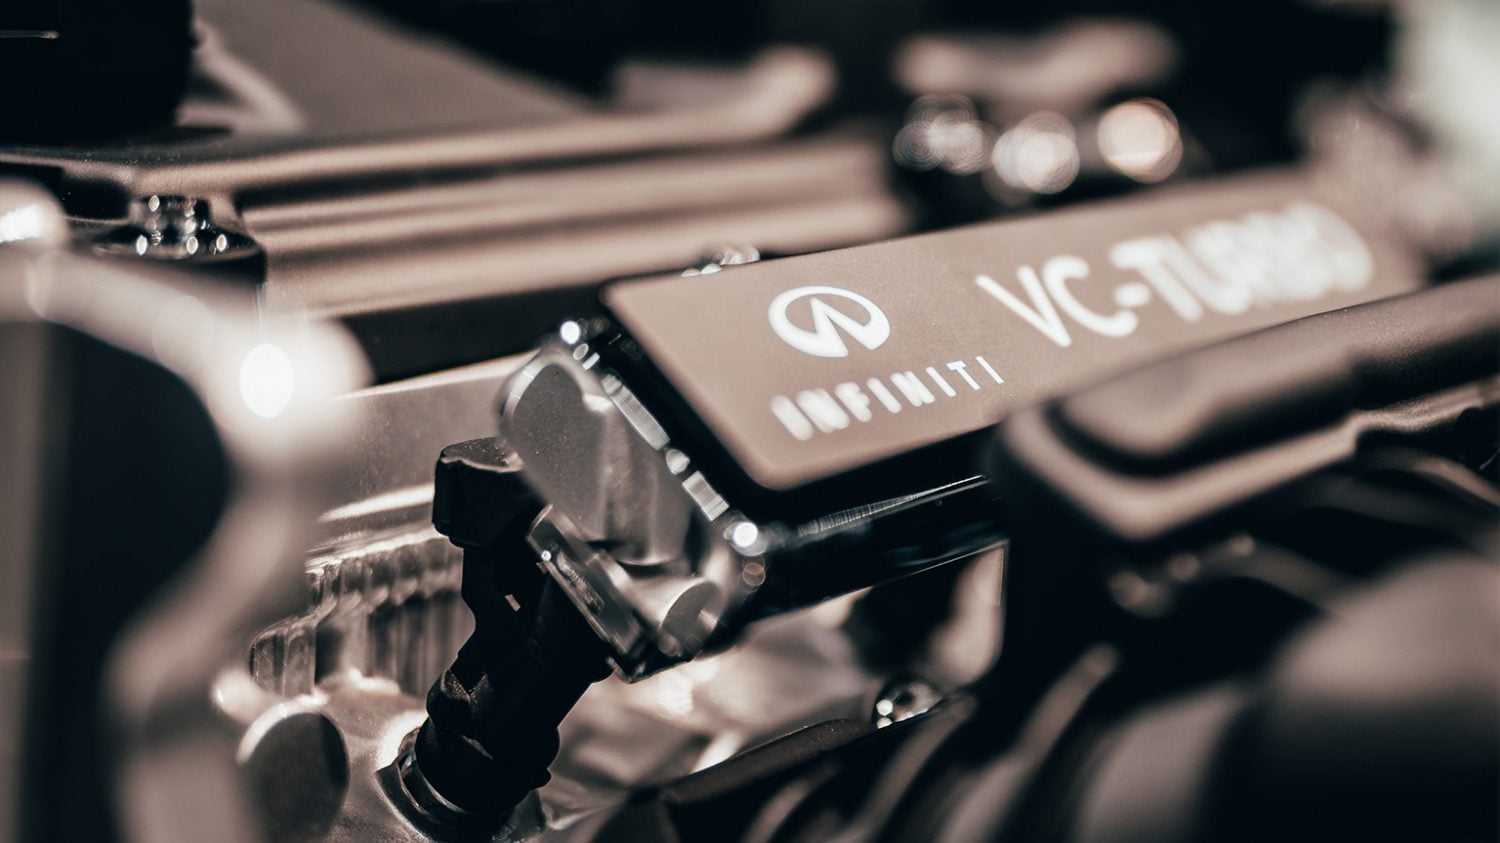 Closeup View Of The INFINITI VC-Turbo Engine, Highlighting INFINITI VC-Turbo Branding